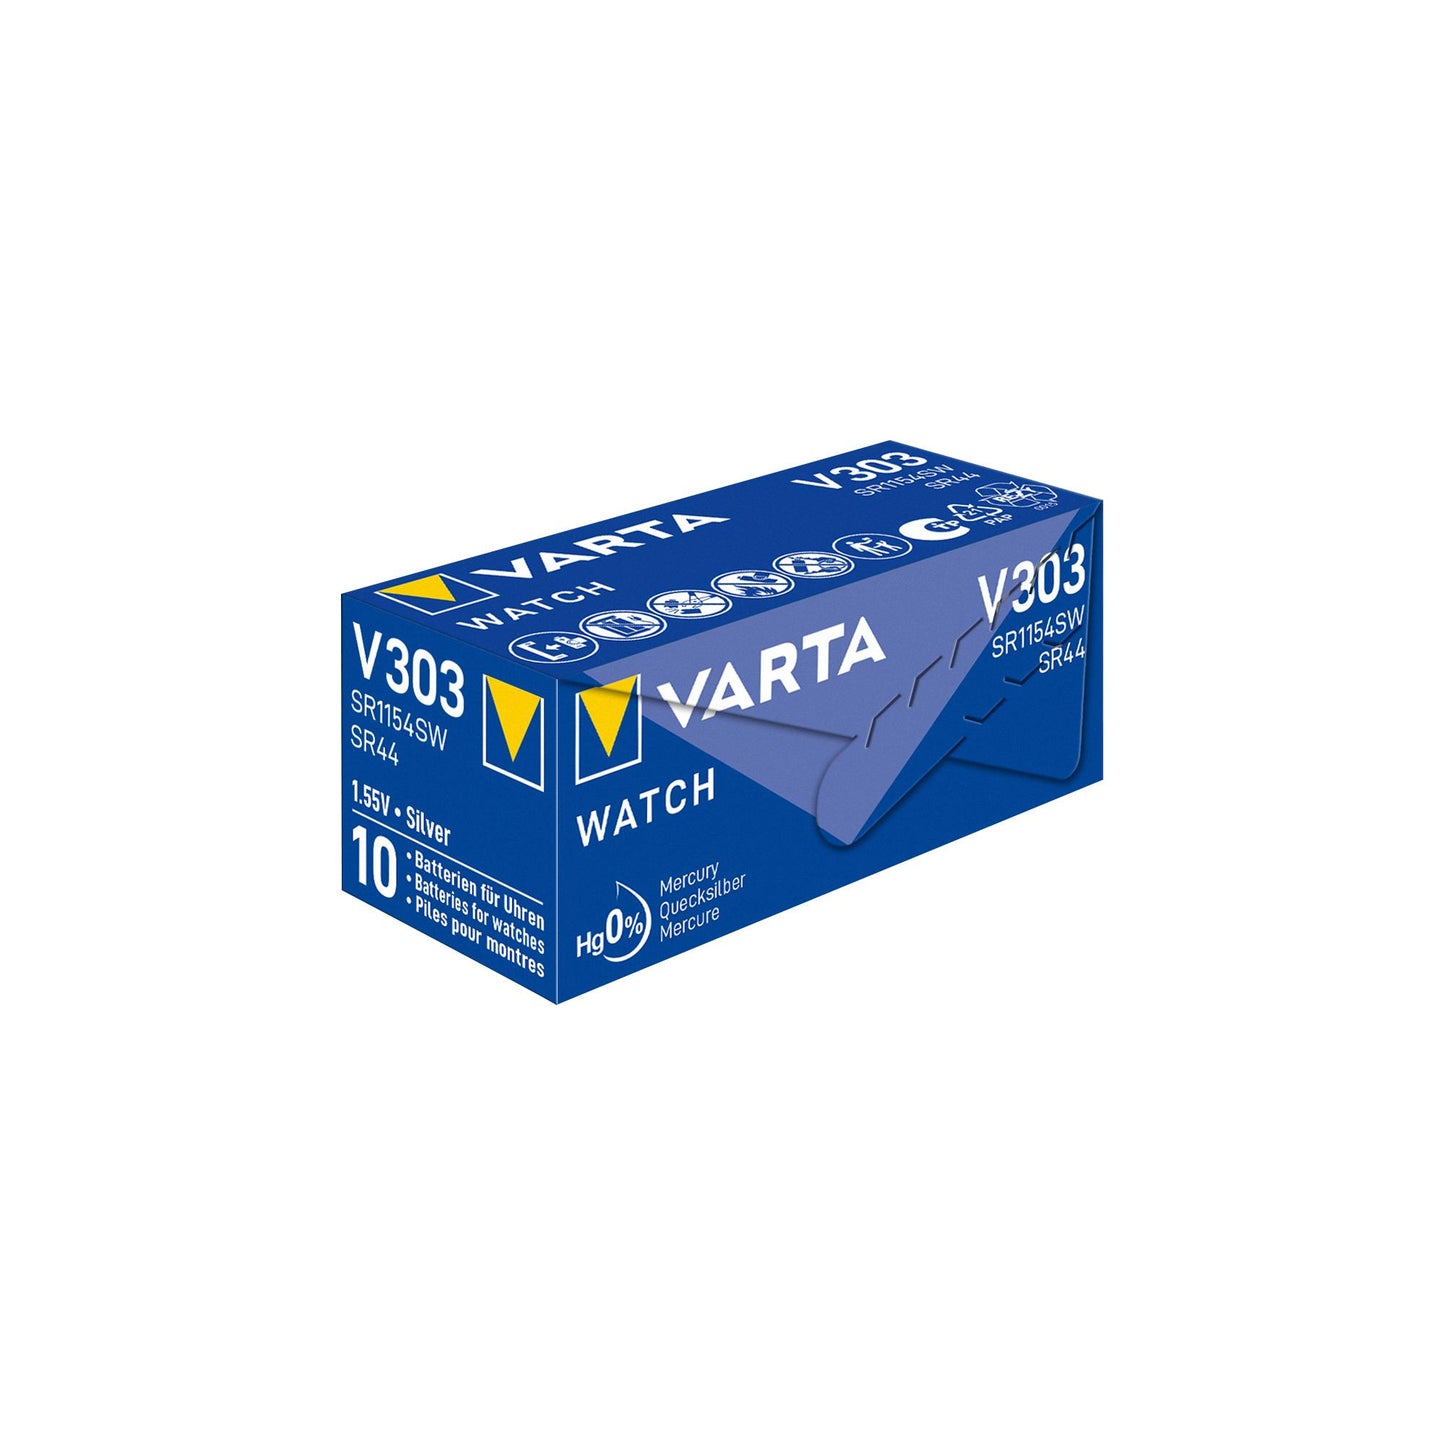 VARTA Batterie Silver Oxide Knopfzelle 303 SR44 - 1.55V Watch Retail (10-Pack)